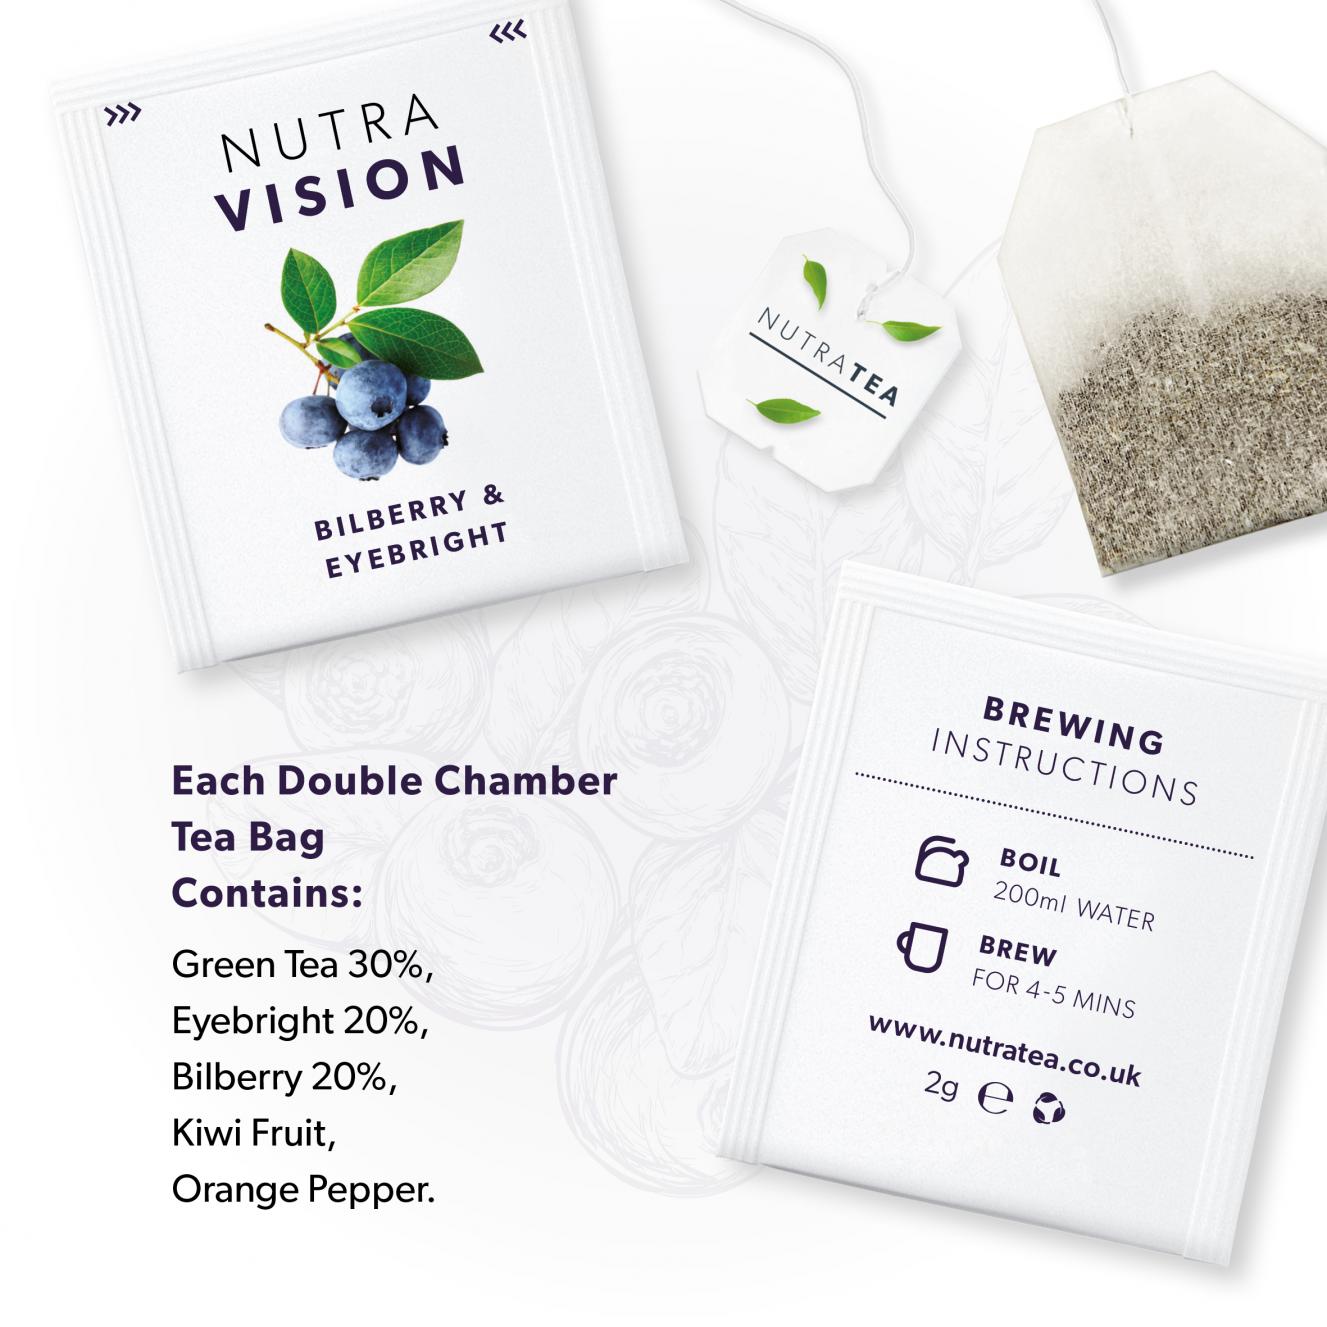 Nutratea Nutra Vision Tea Bags 20's